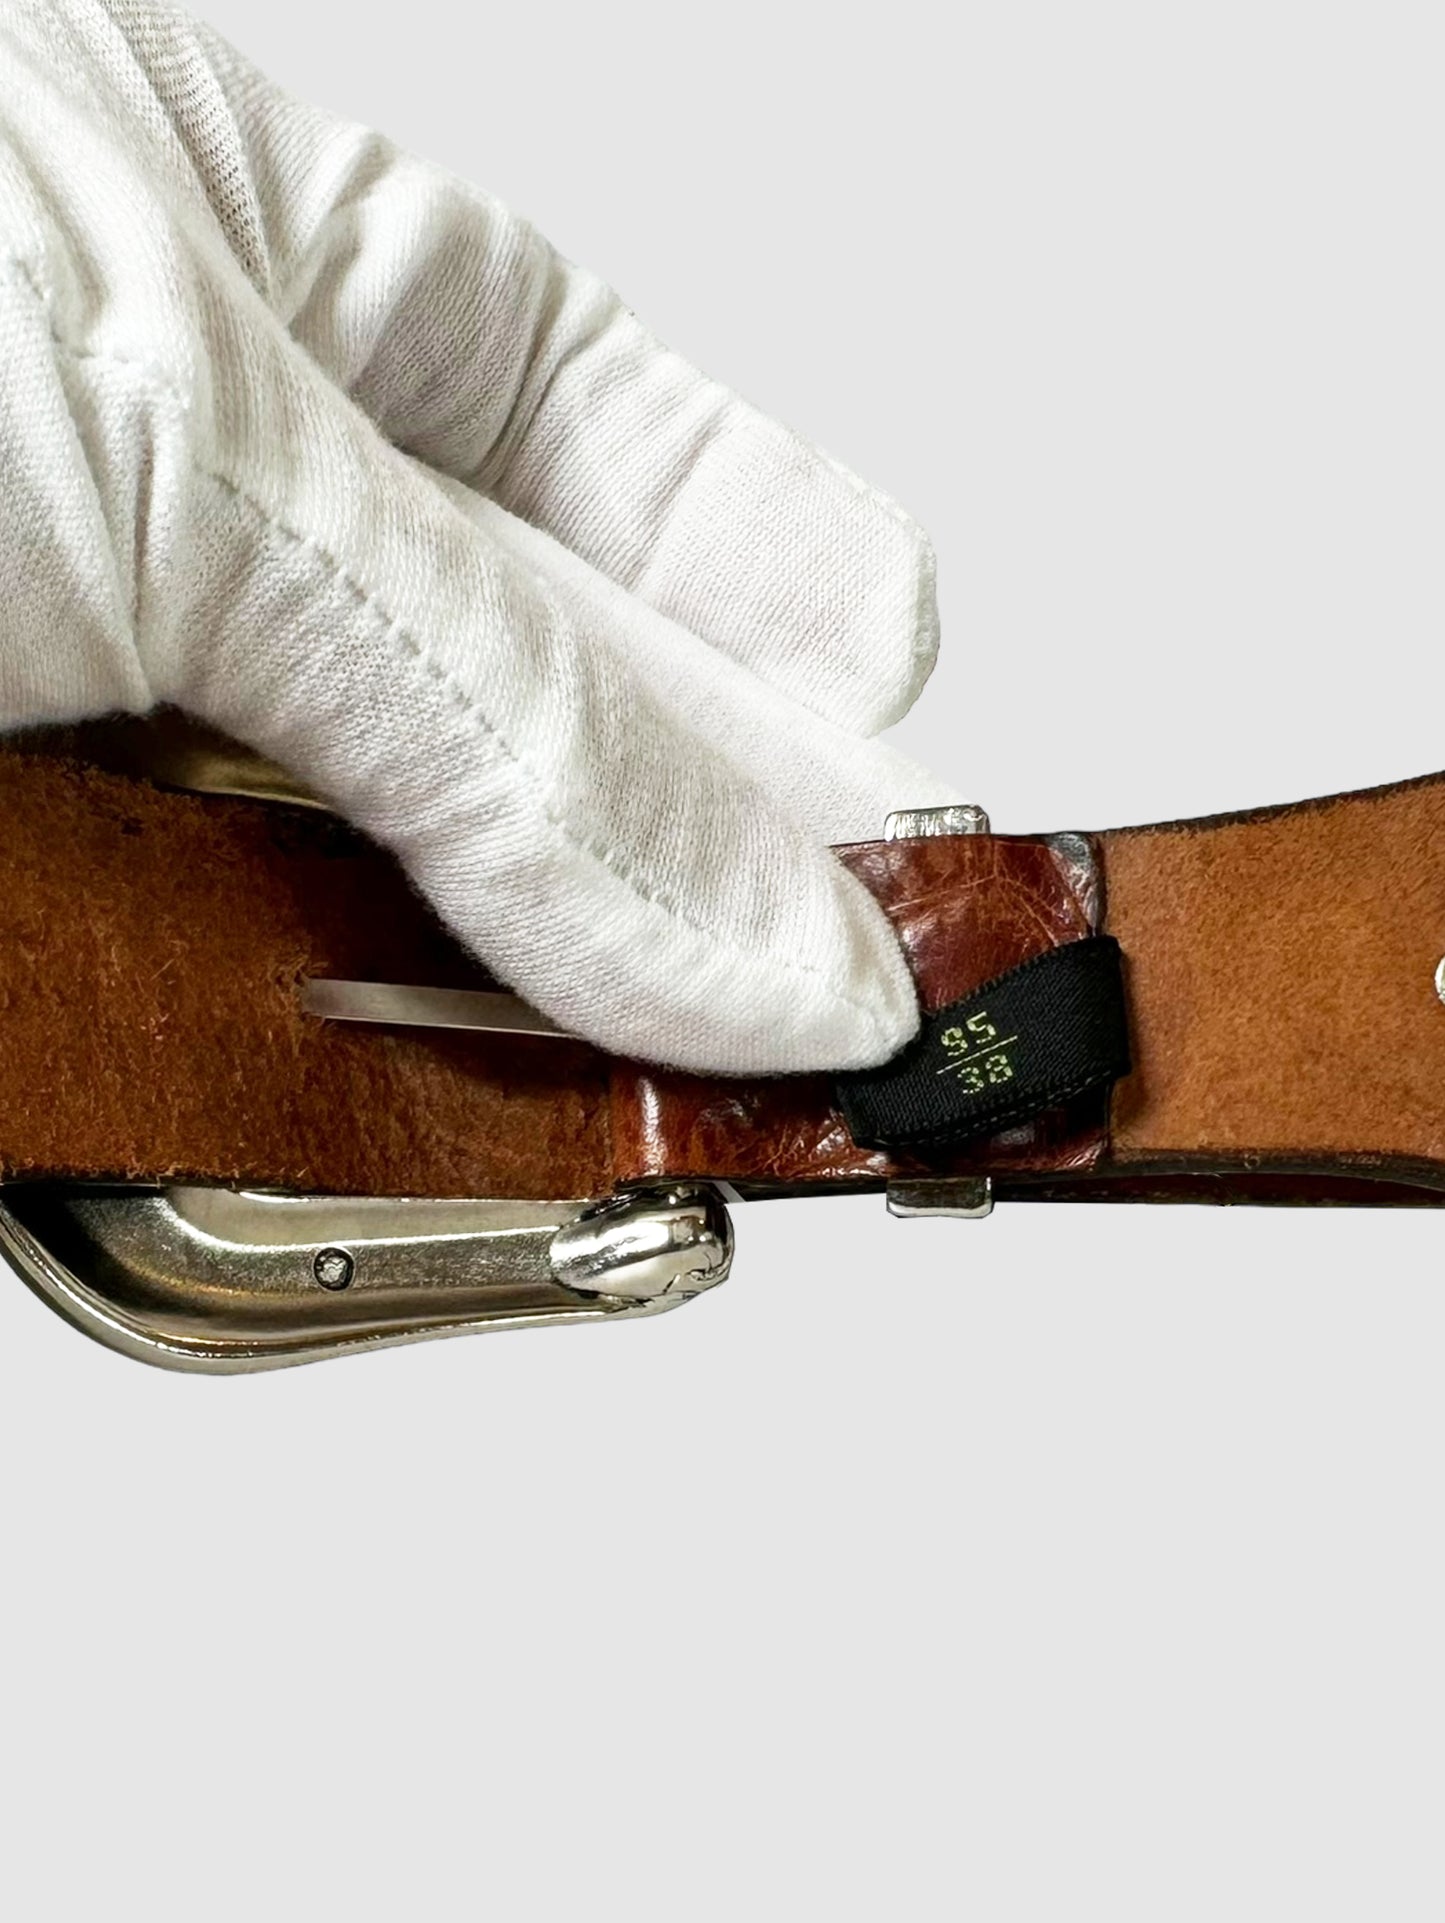 Leather Western Belt - Size 38